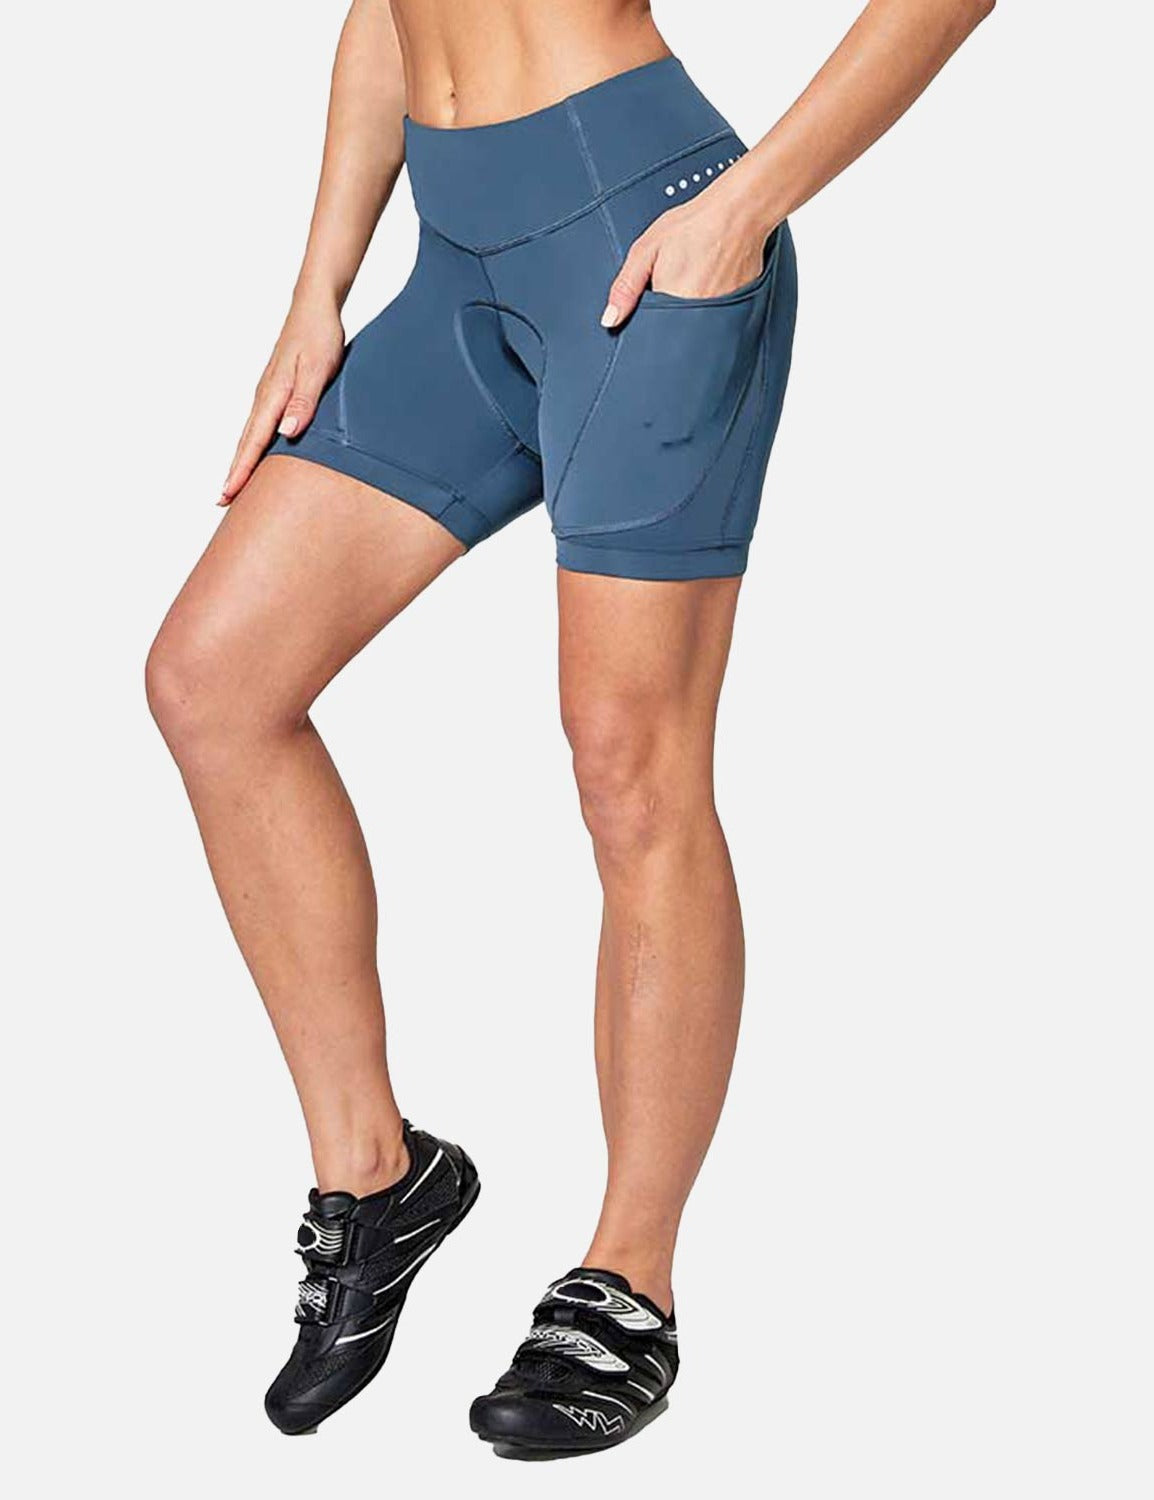 BALEAF Women's 4D Padded Bike Shorts Cycling Underwear with Padding Pockets  BLUE